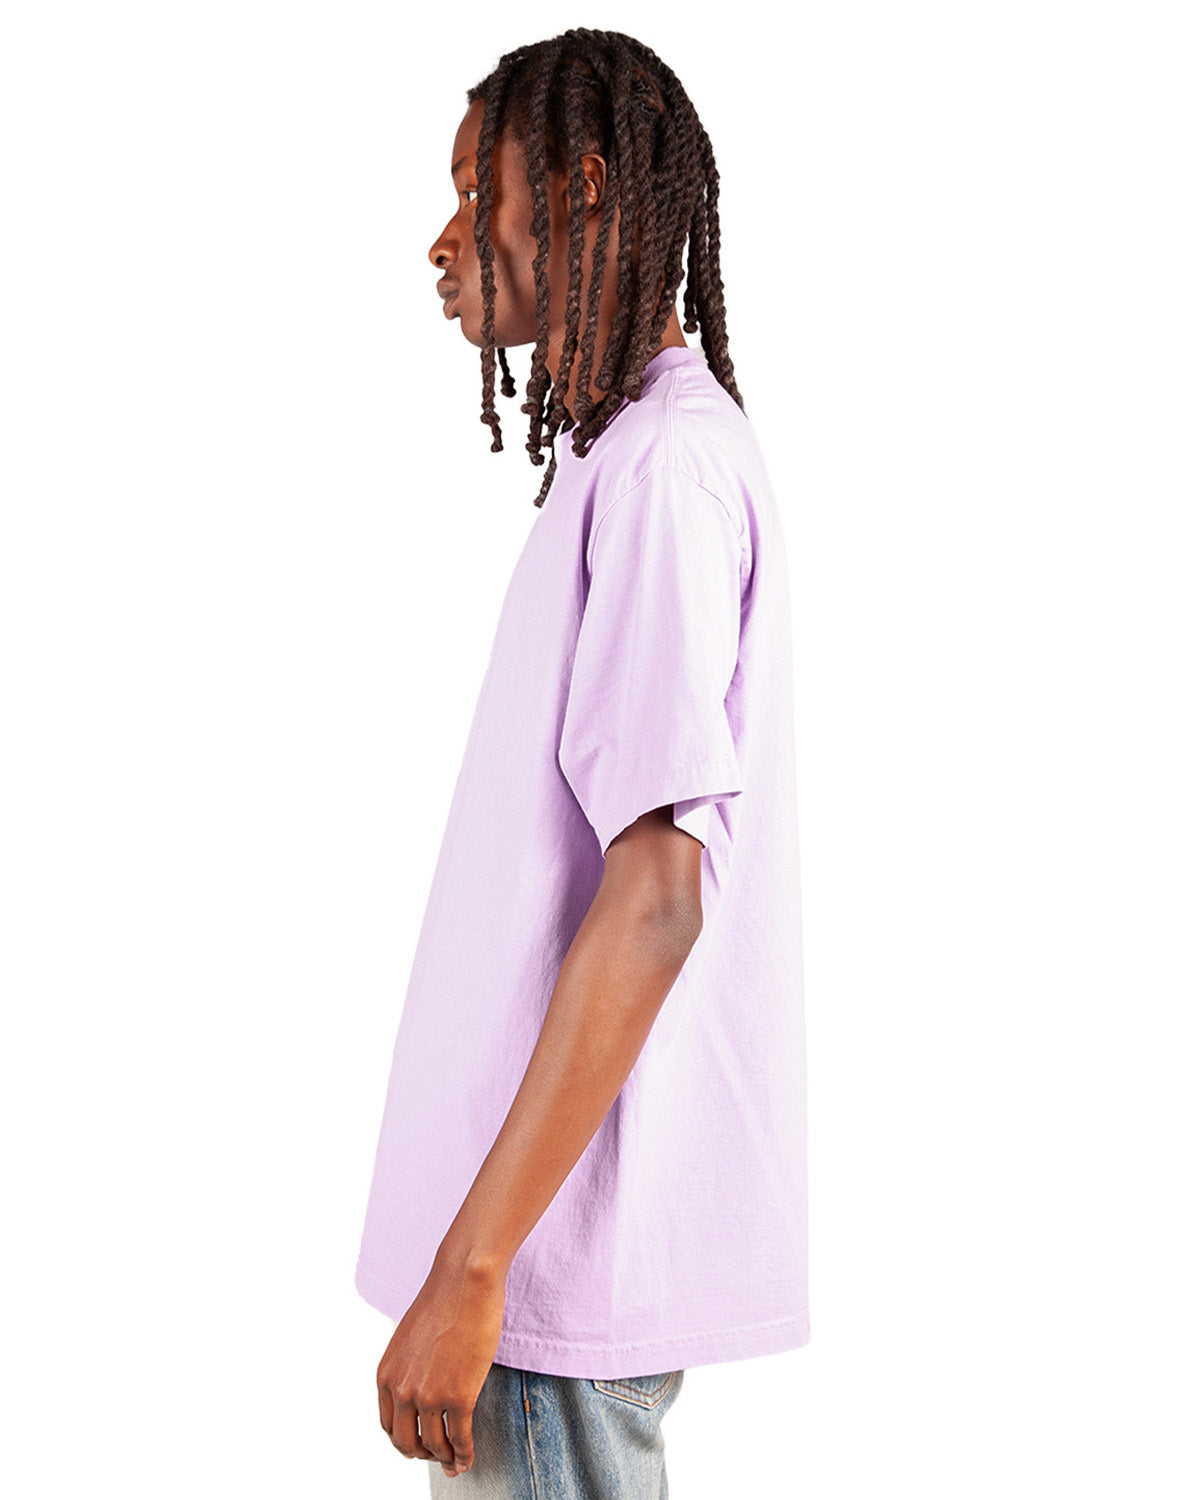 Shaka Wear SHGD - Garment-Dyed Crewneck T-Shirt, Oatmeal, L